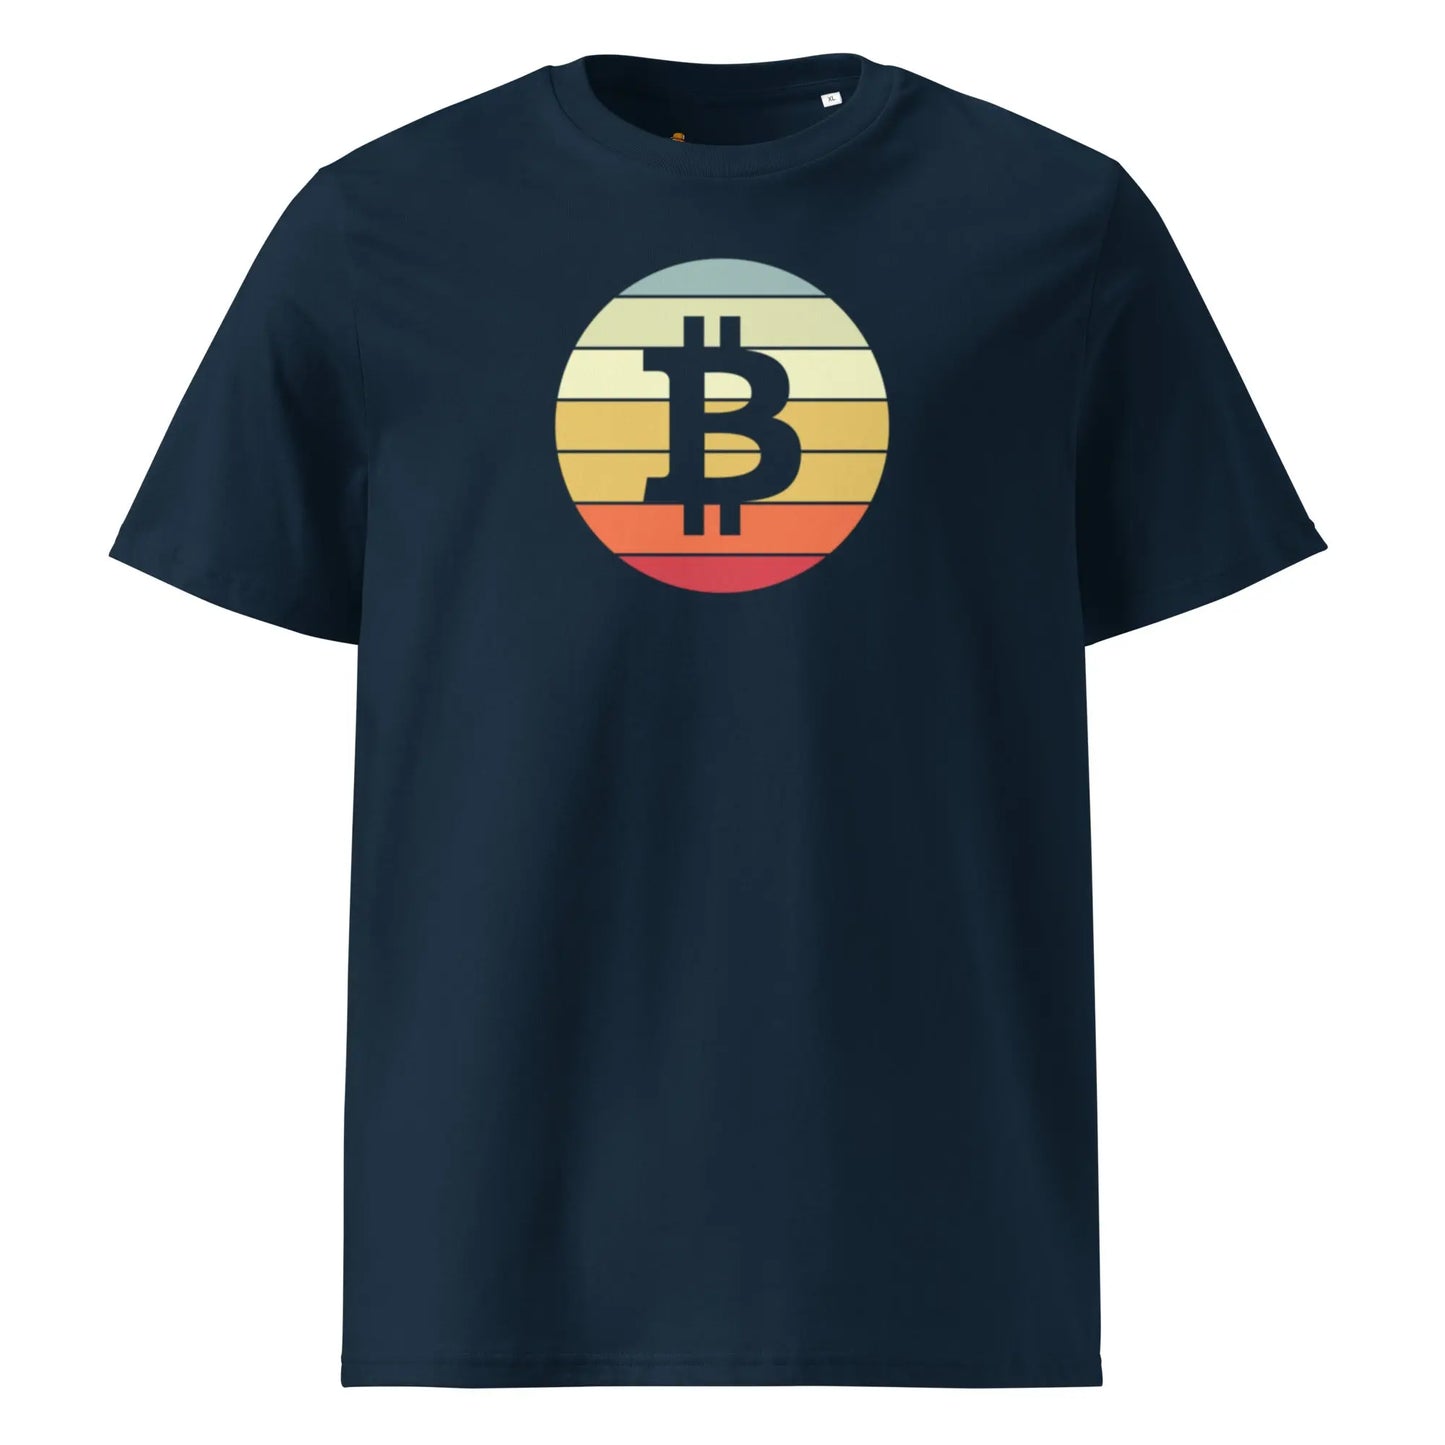 Vintage Bitcoin Sunset - Premium Unisex Organic Cotton Bitcoin T-shirt Navy Blue Color